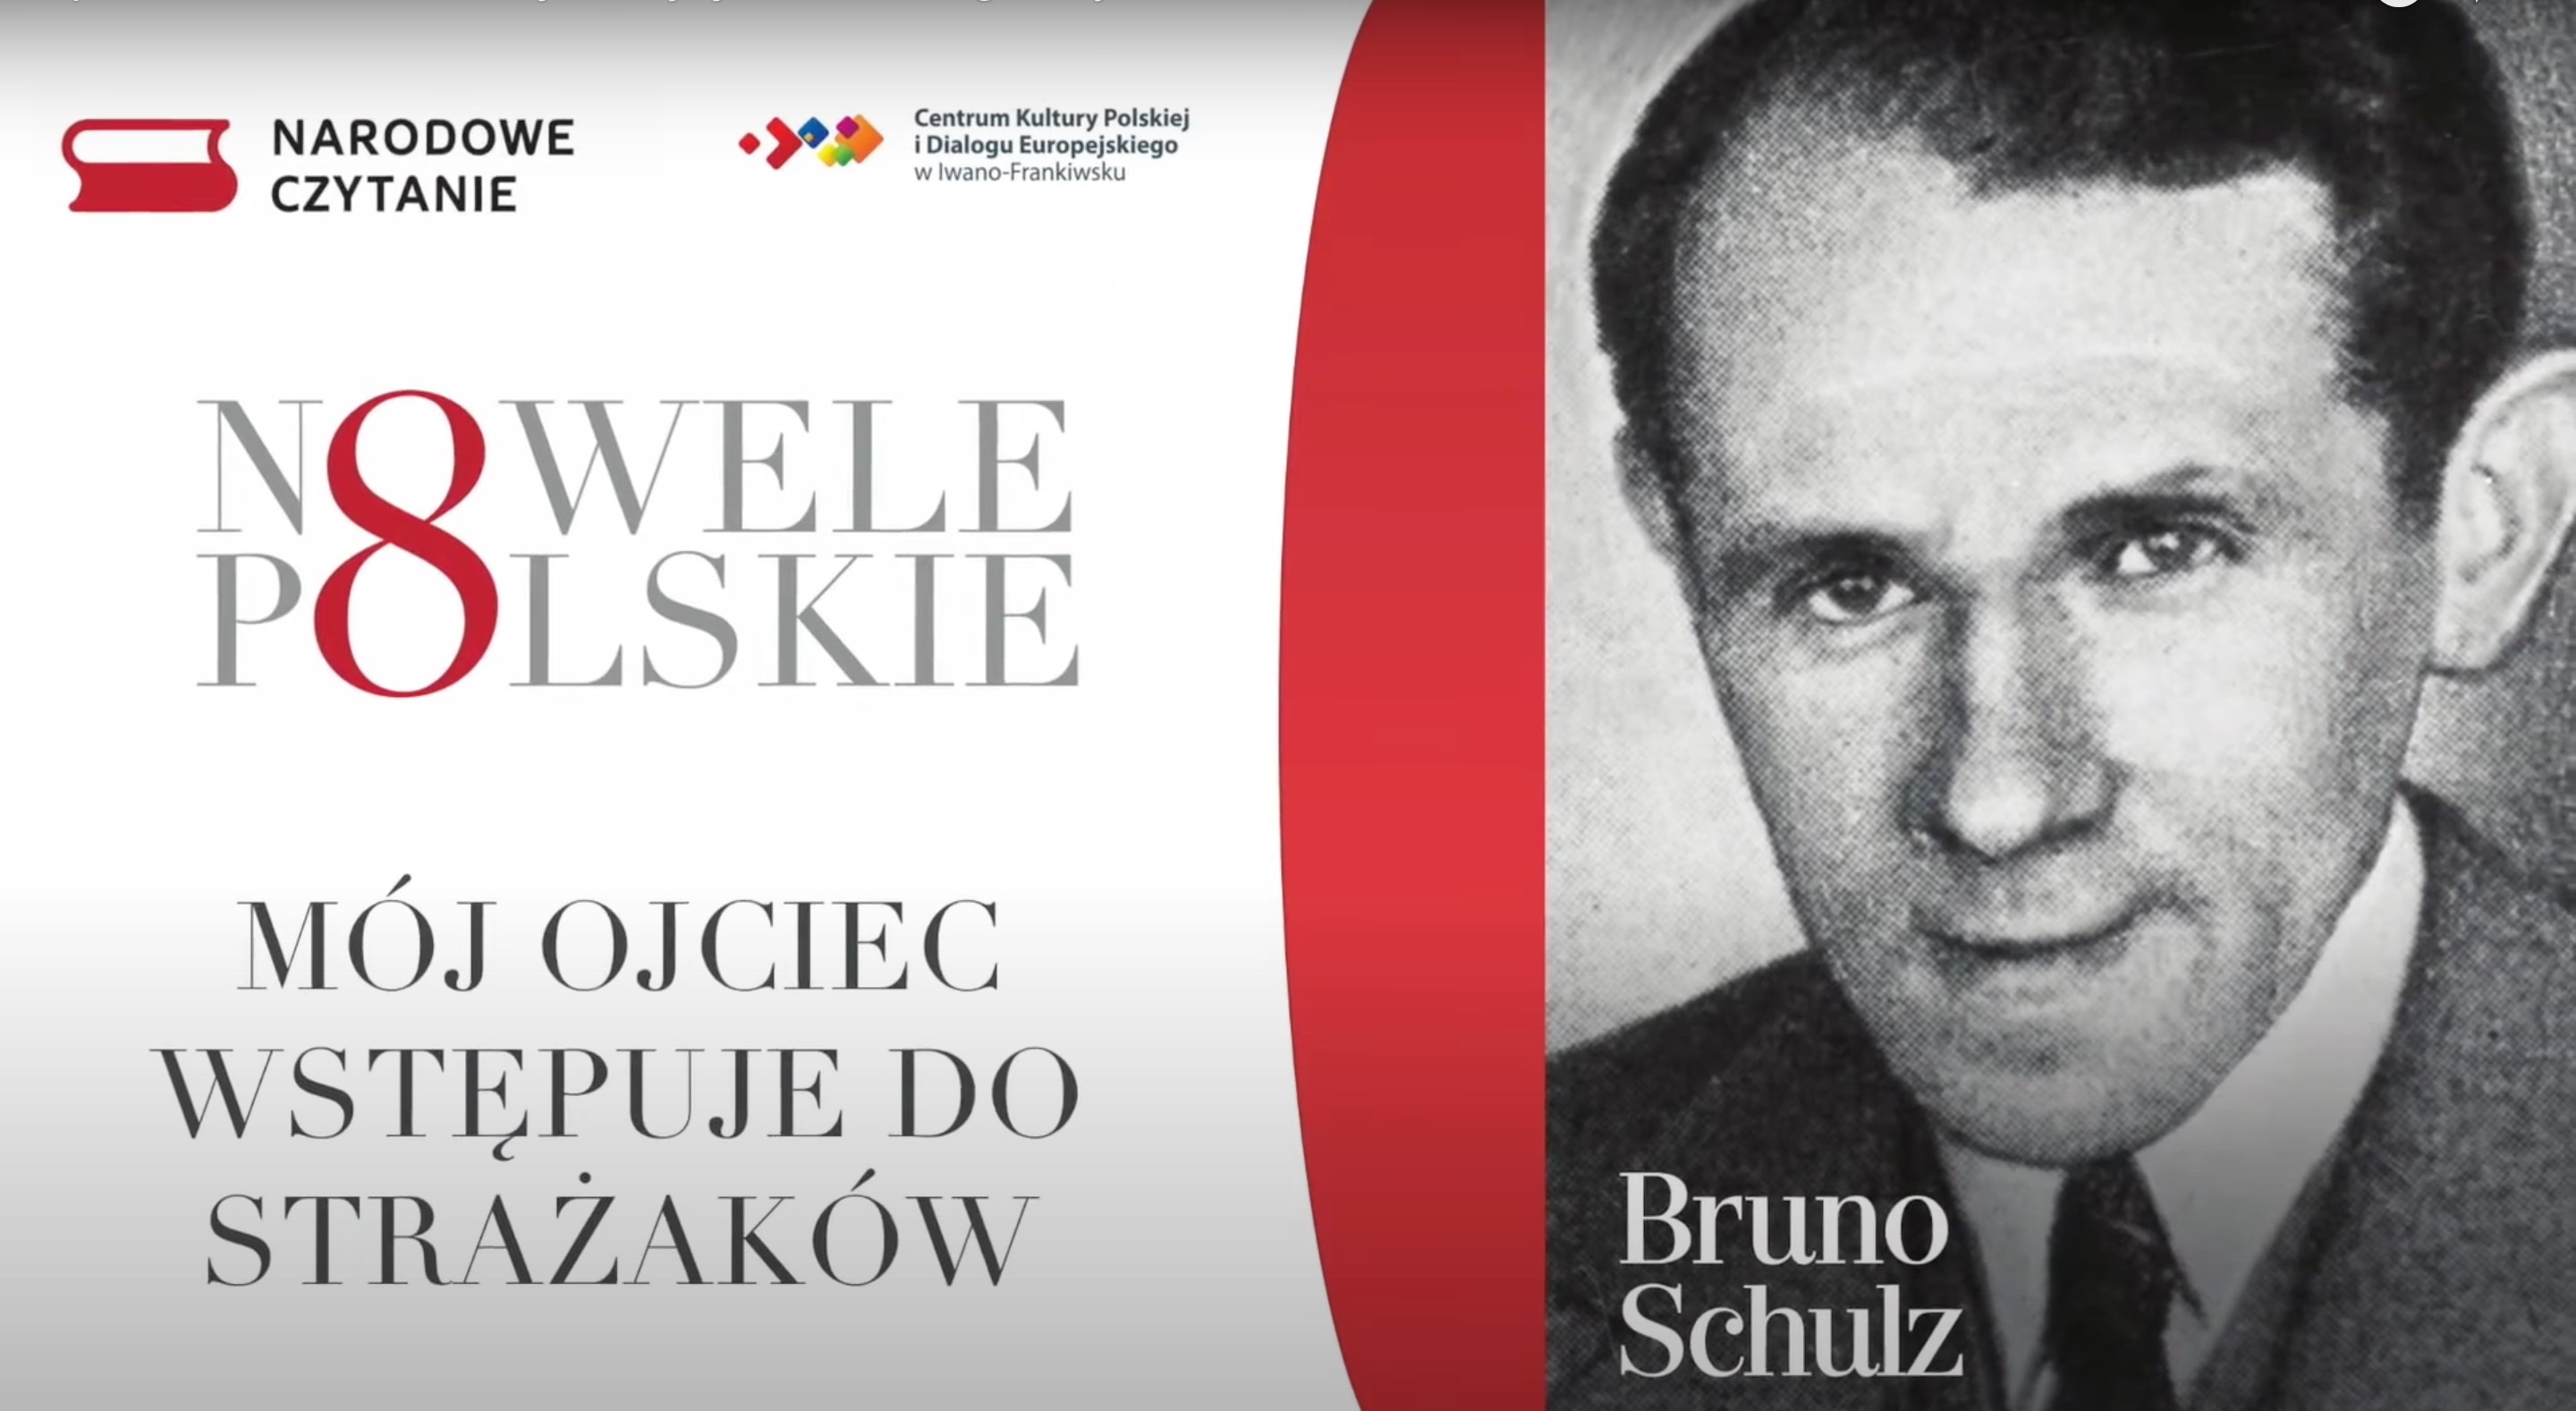 8 польських новел з нагоди 8 етапу Національних читань